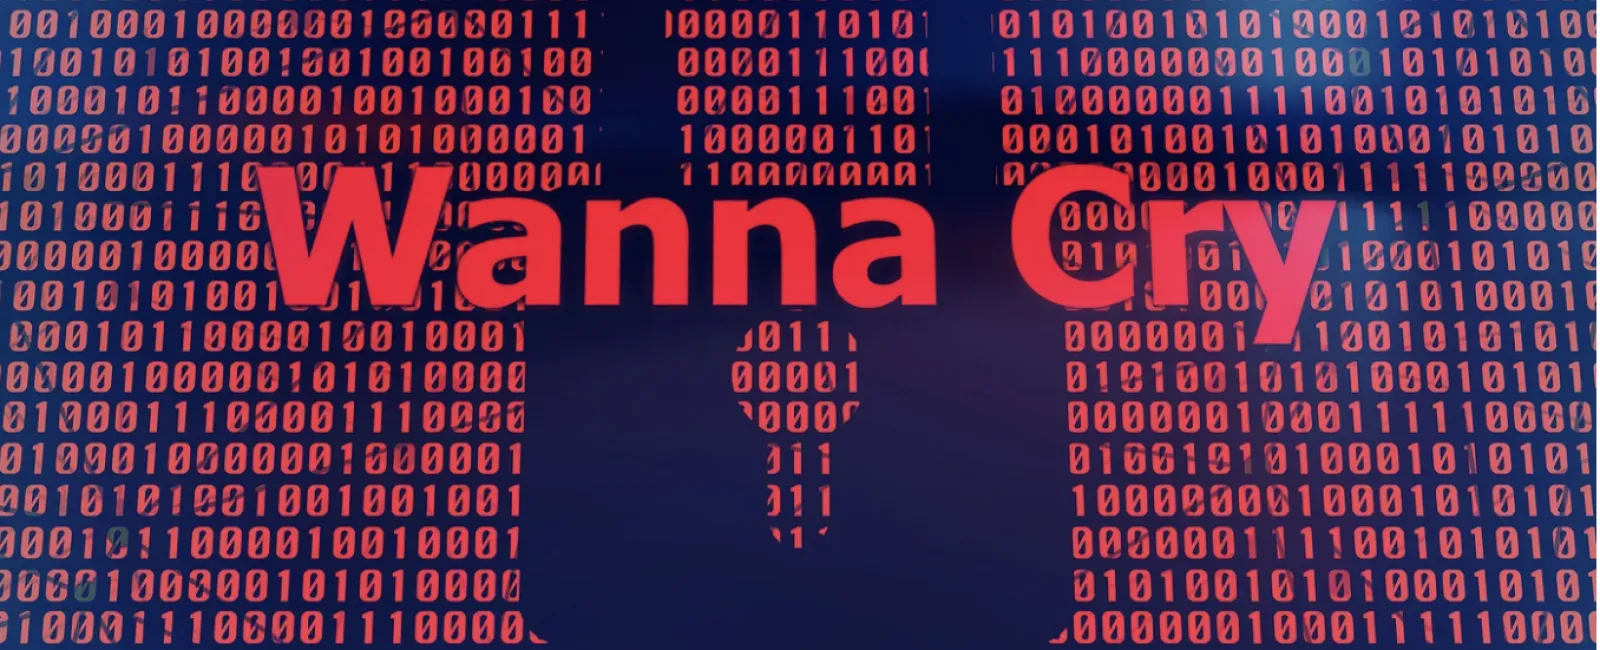 WannaCry Cybersecurity